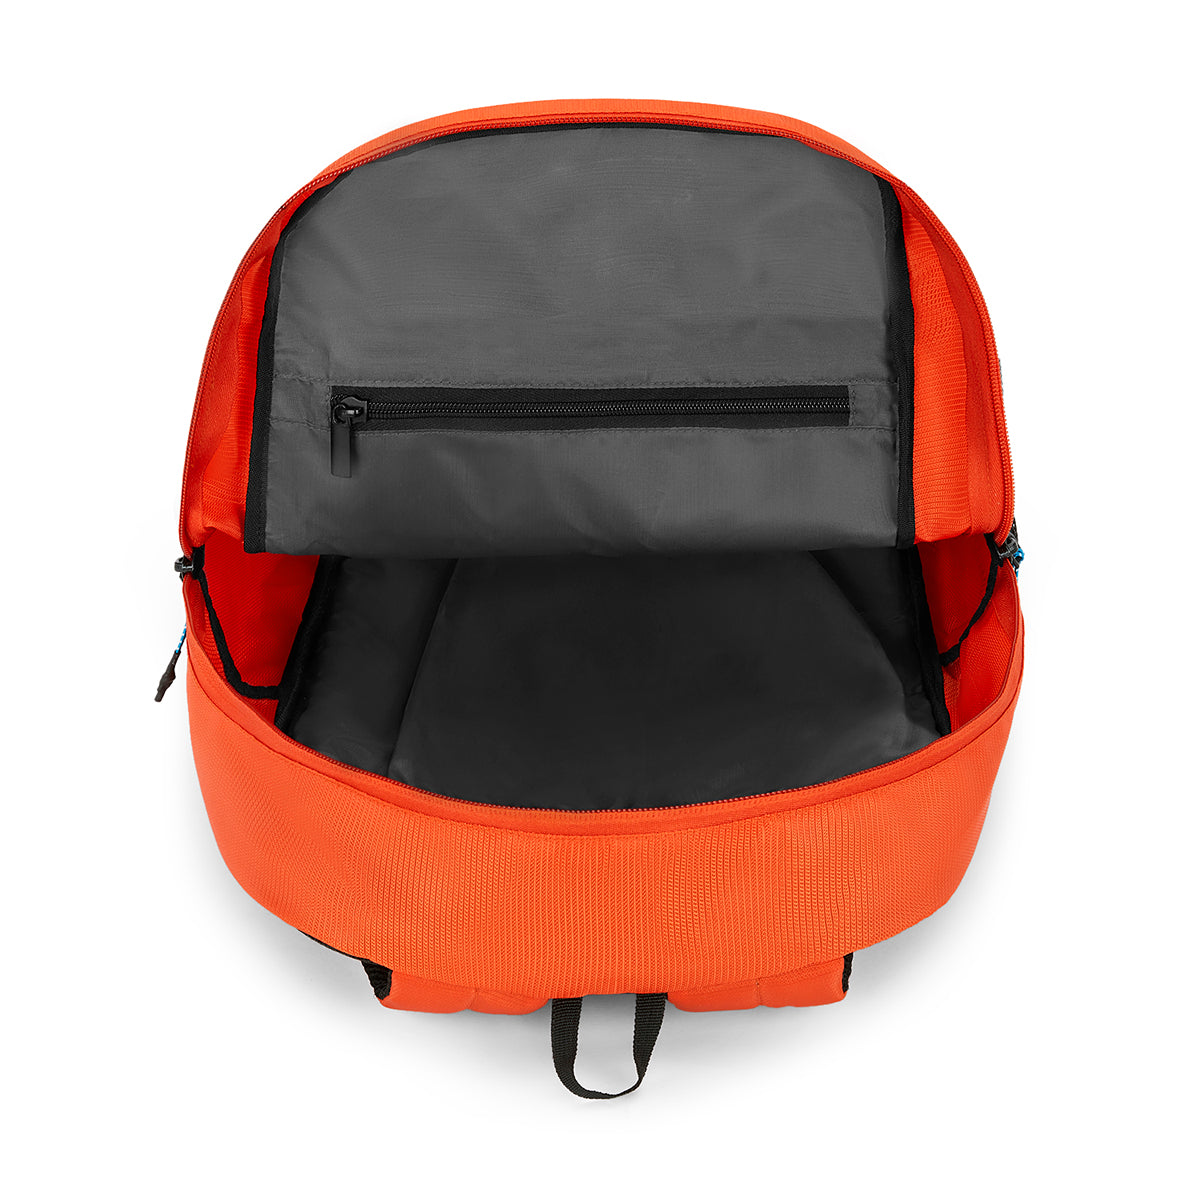 United Colors of Benetton Caspian Laptop Orange Backpack